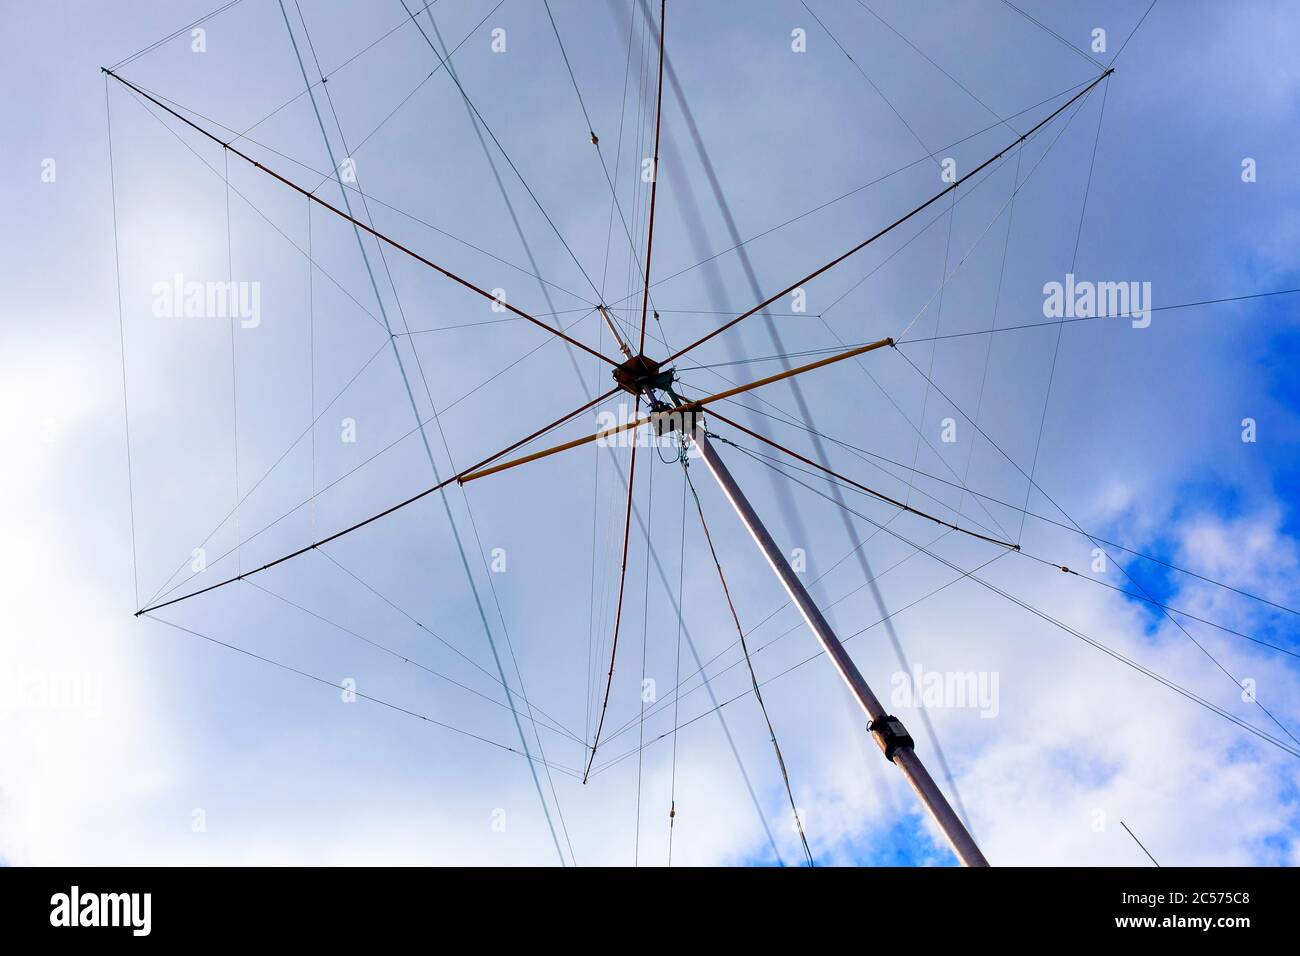 Tall Ham radio (amateur radio) antenna against cloudy sky. Stock Photo